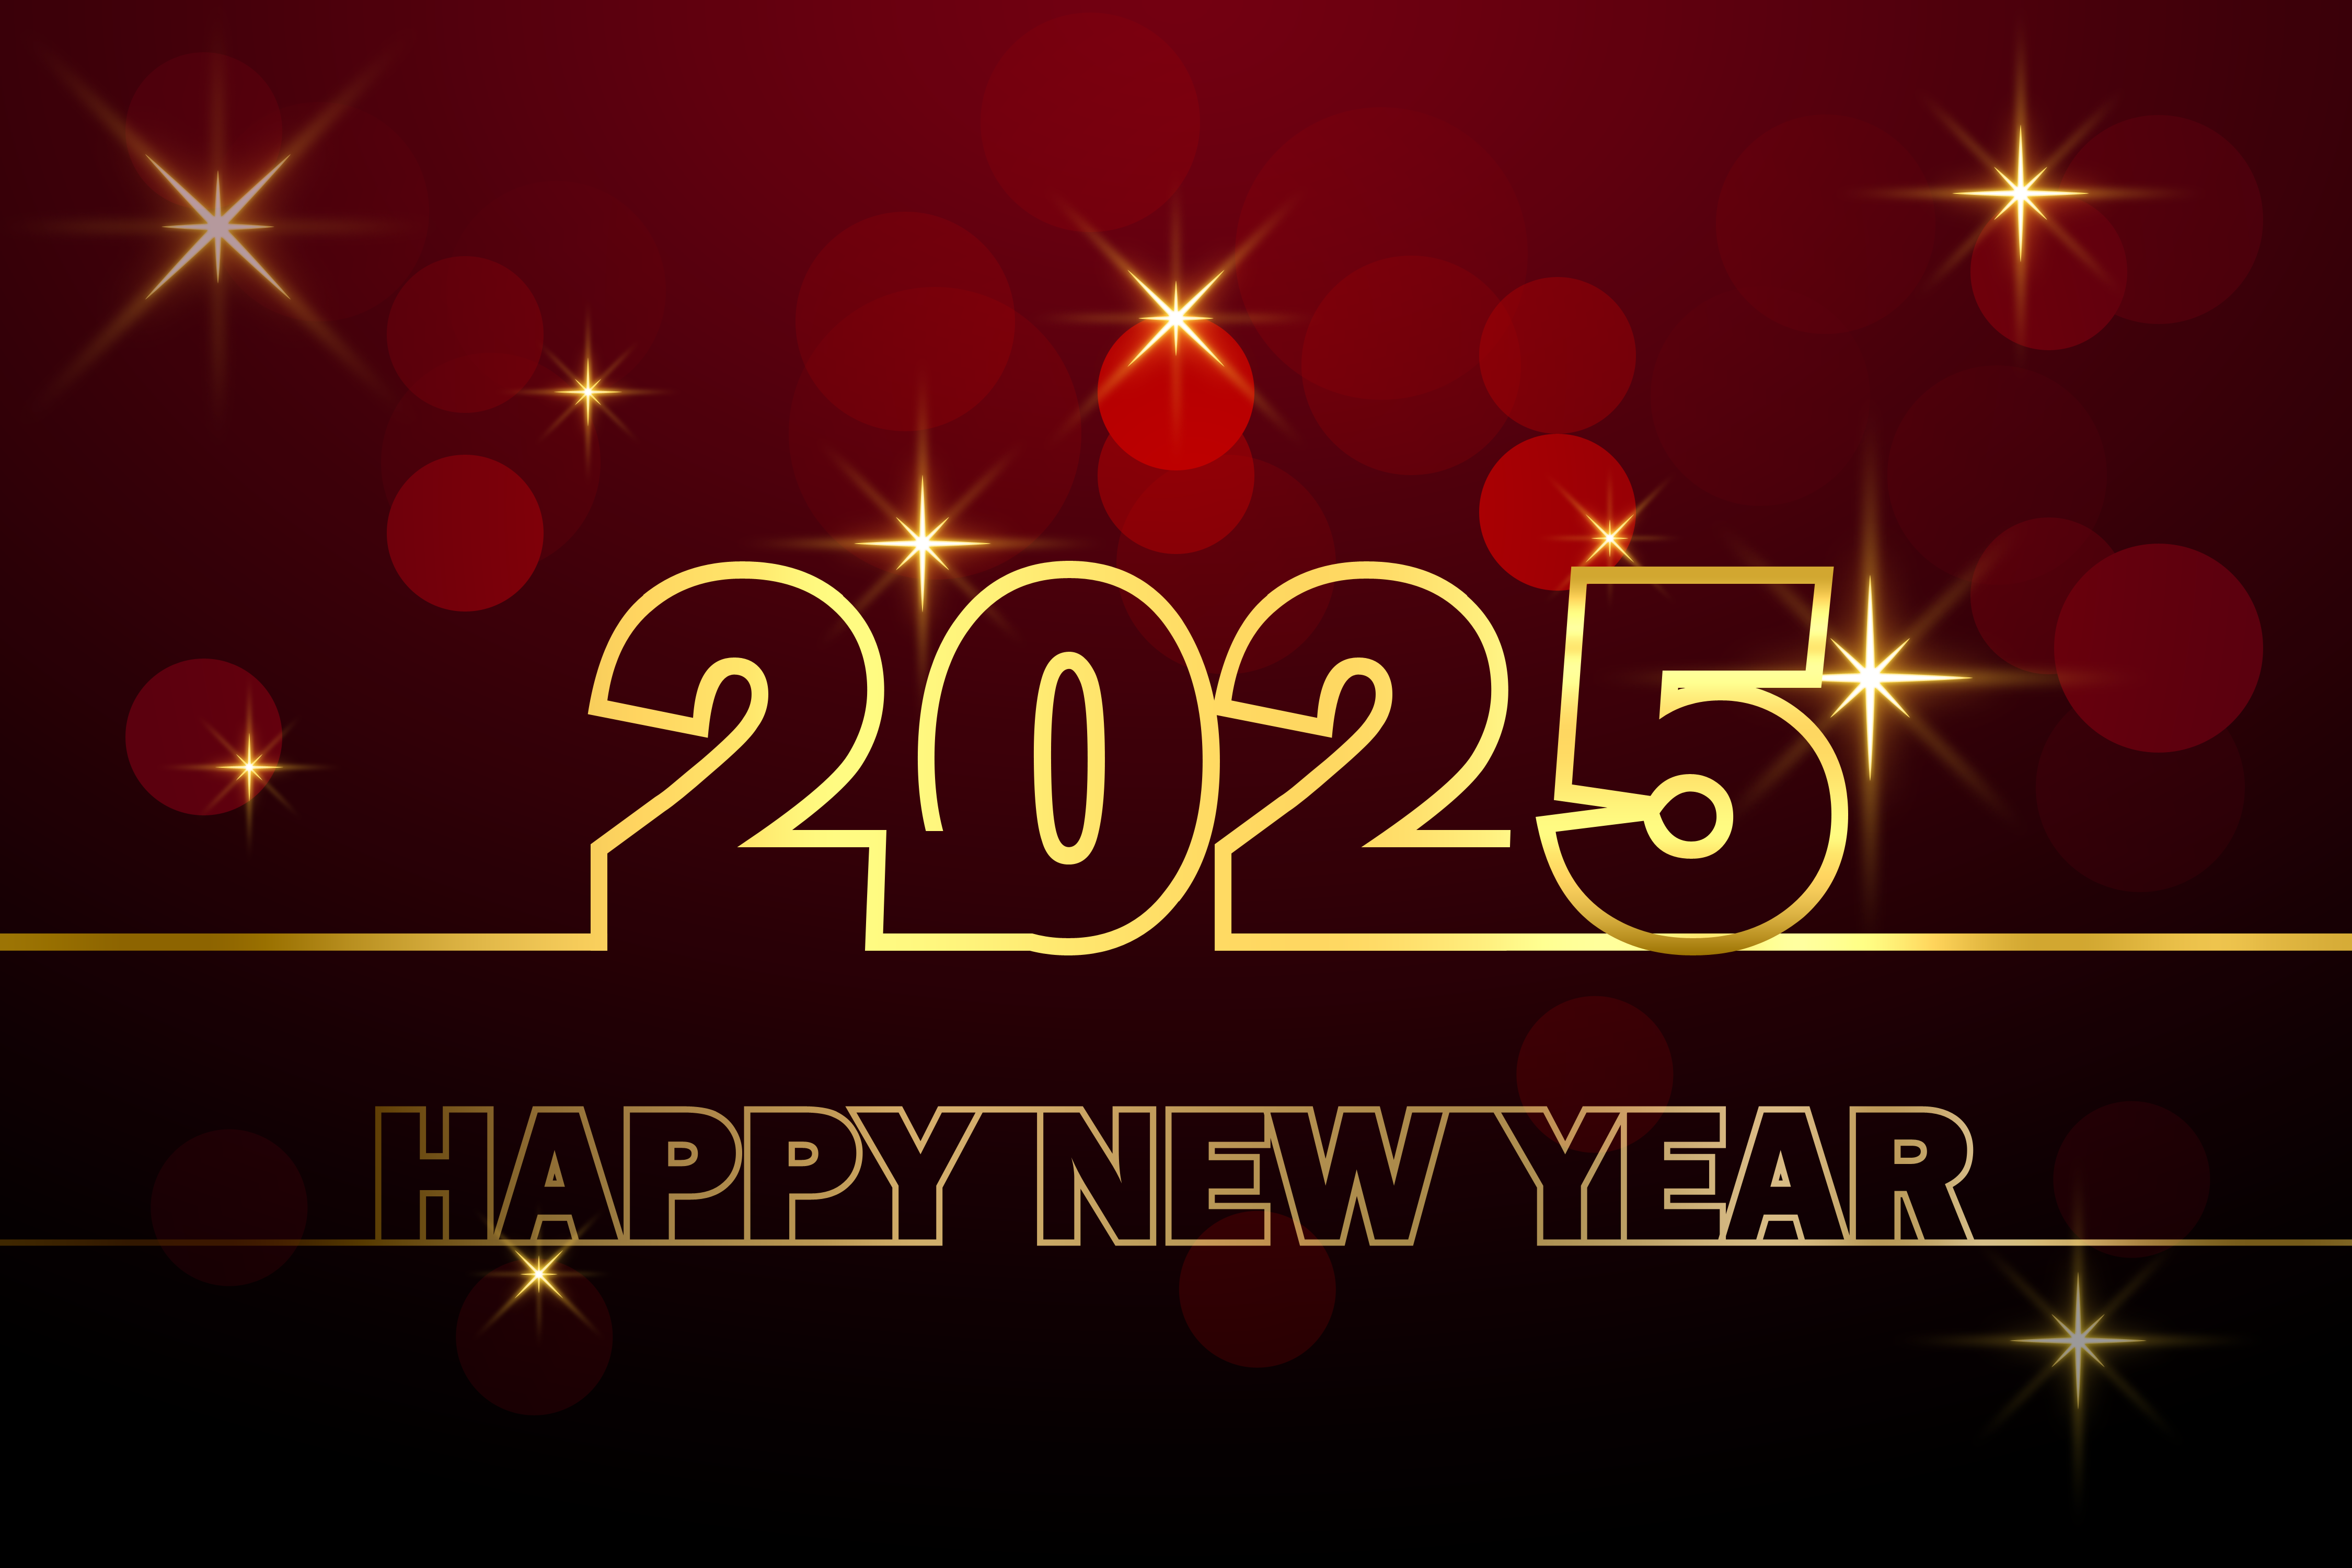 General 4500x3000 2025 (year) New Year holiday digital art text